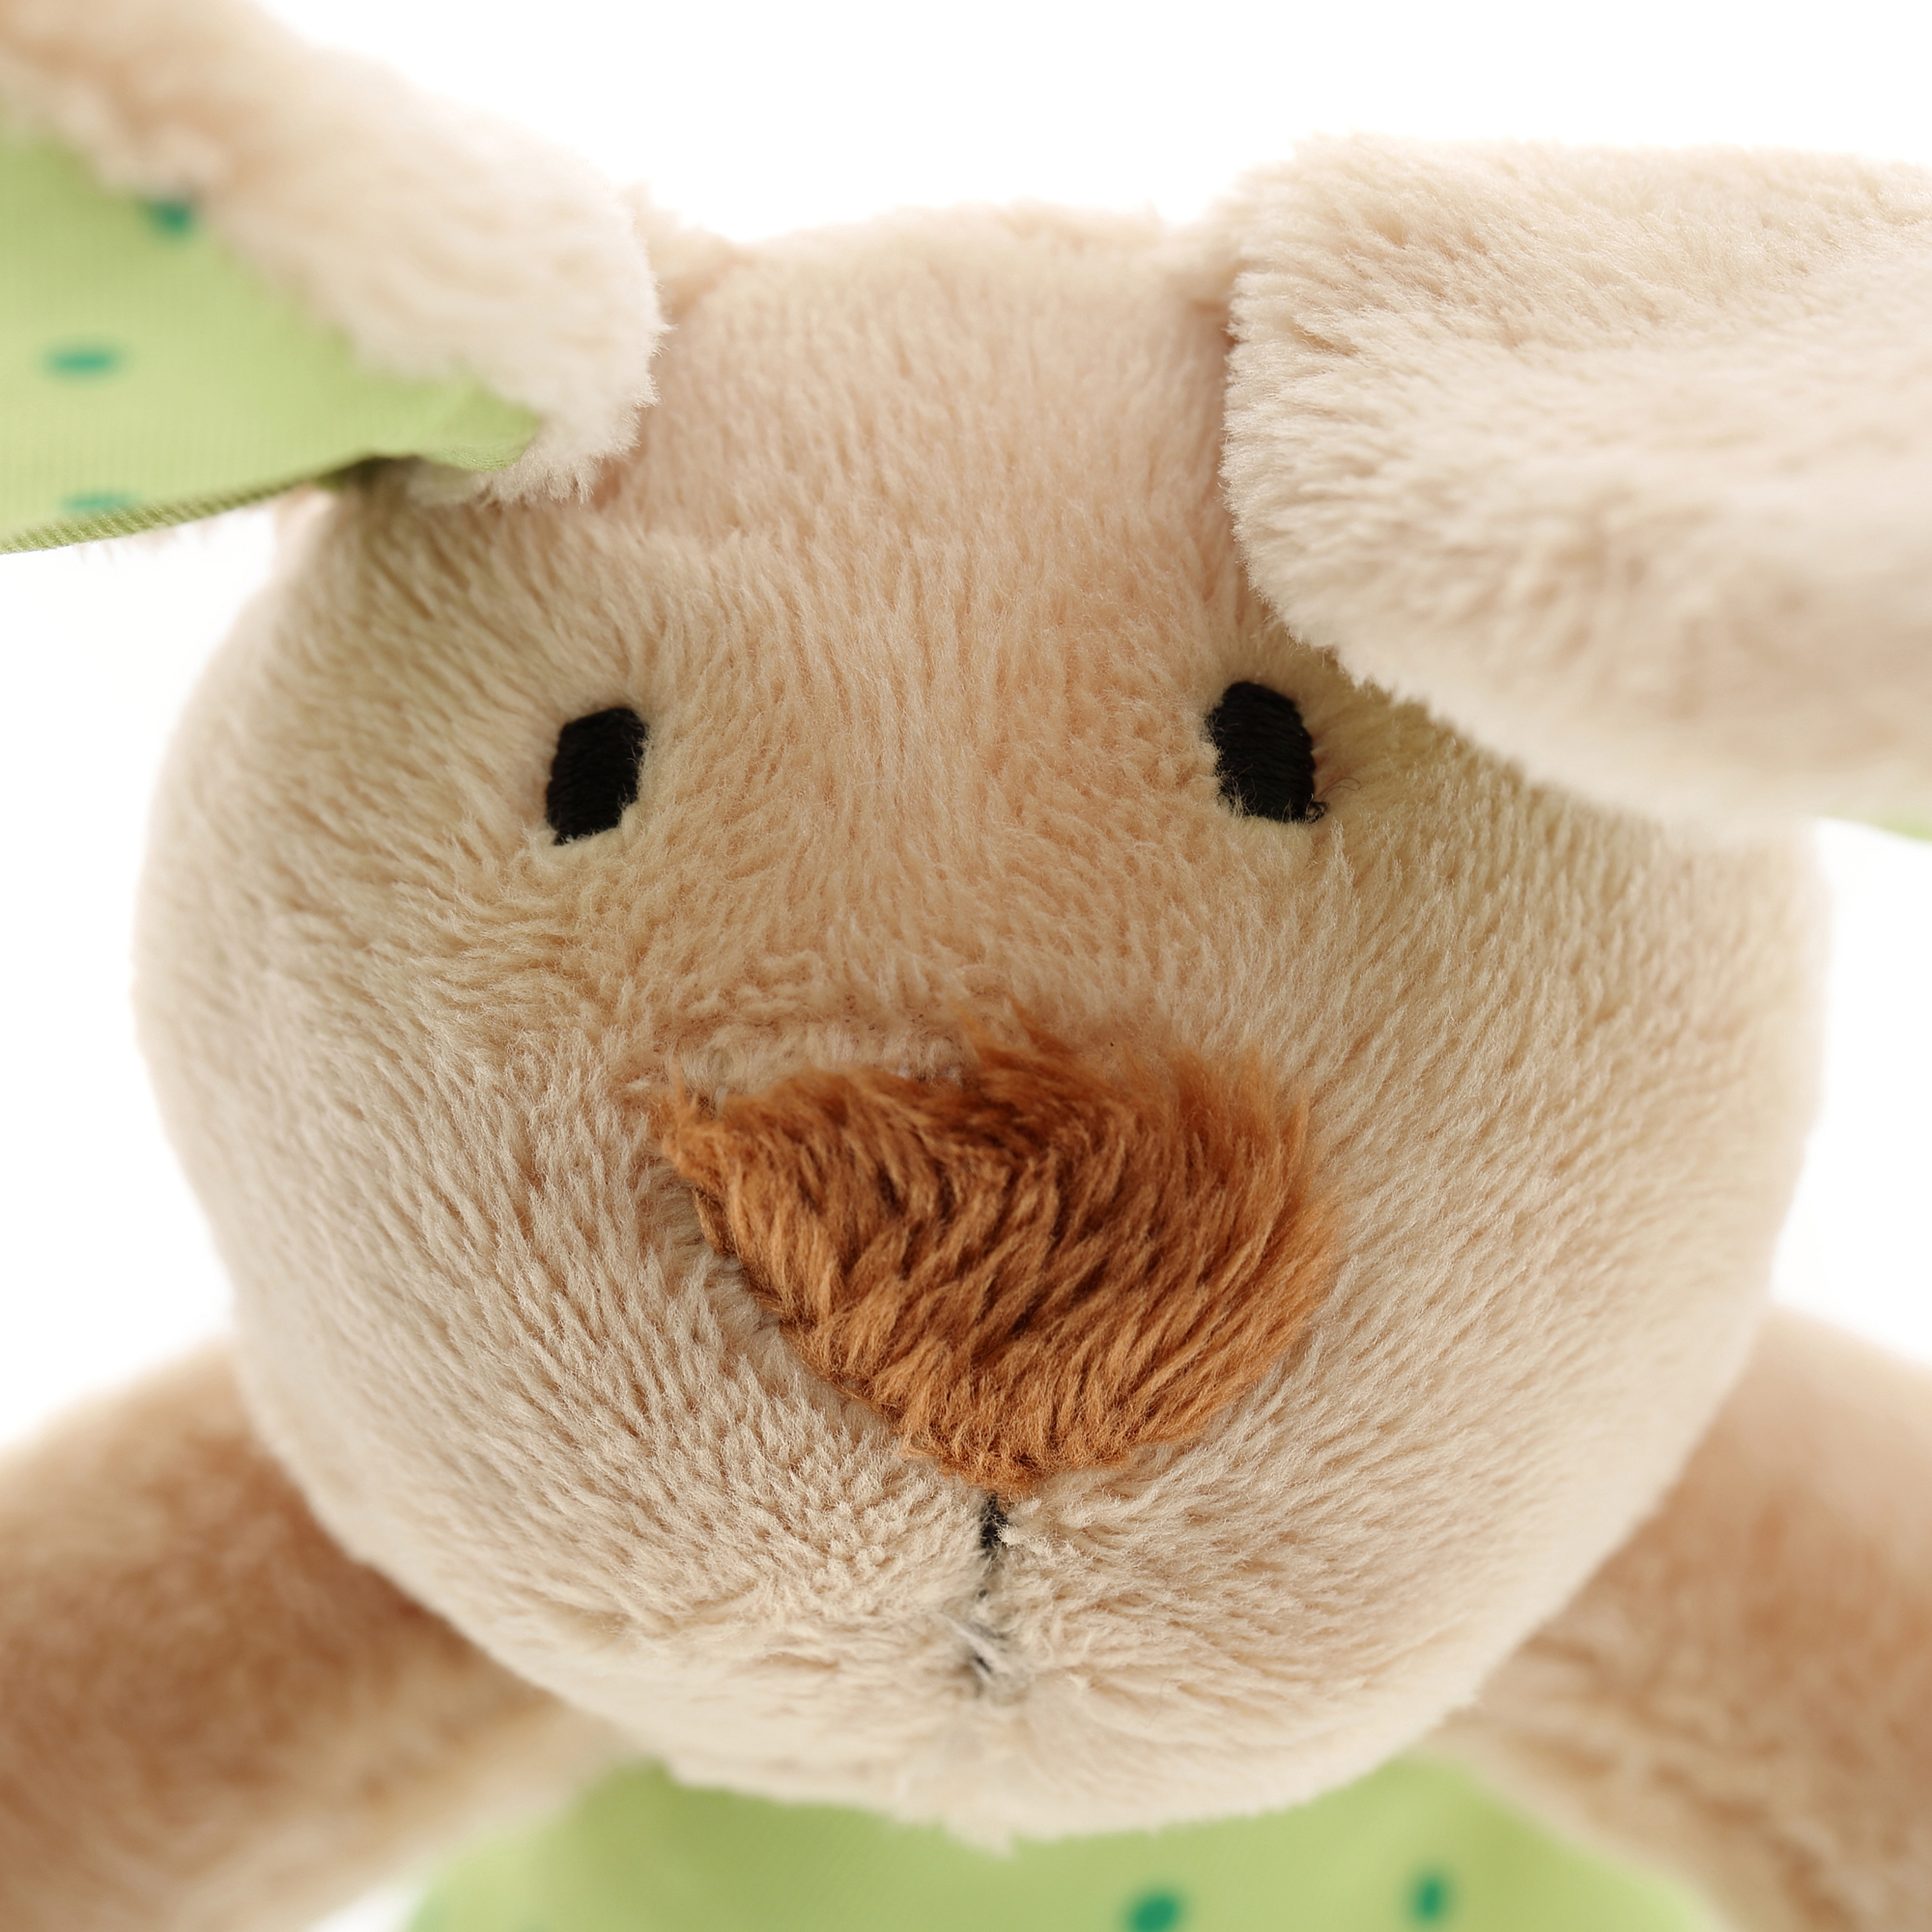 Grasp toy rattle rabbit